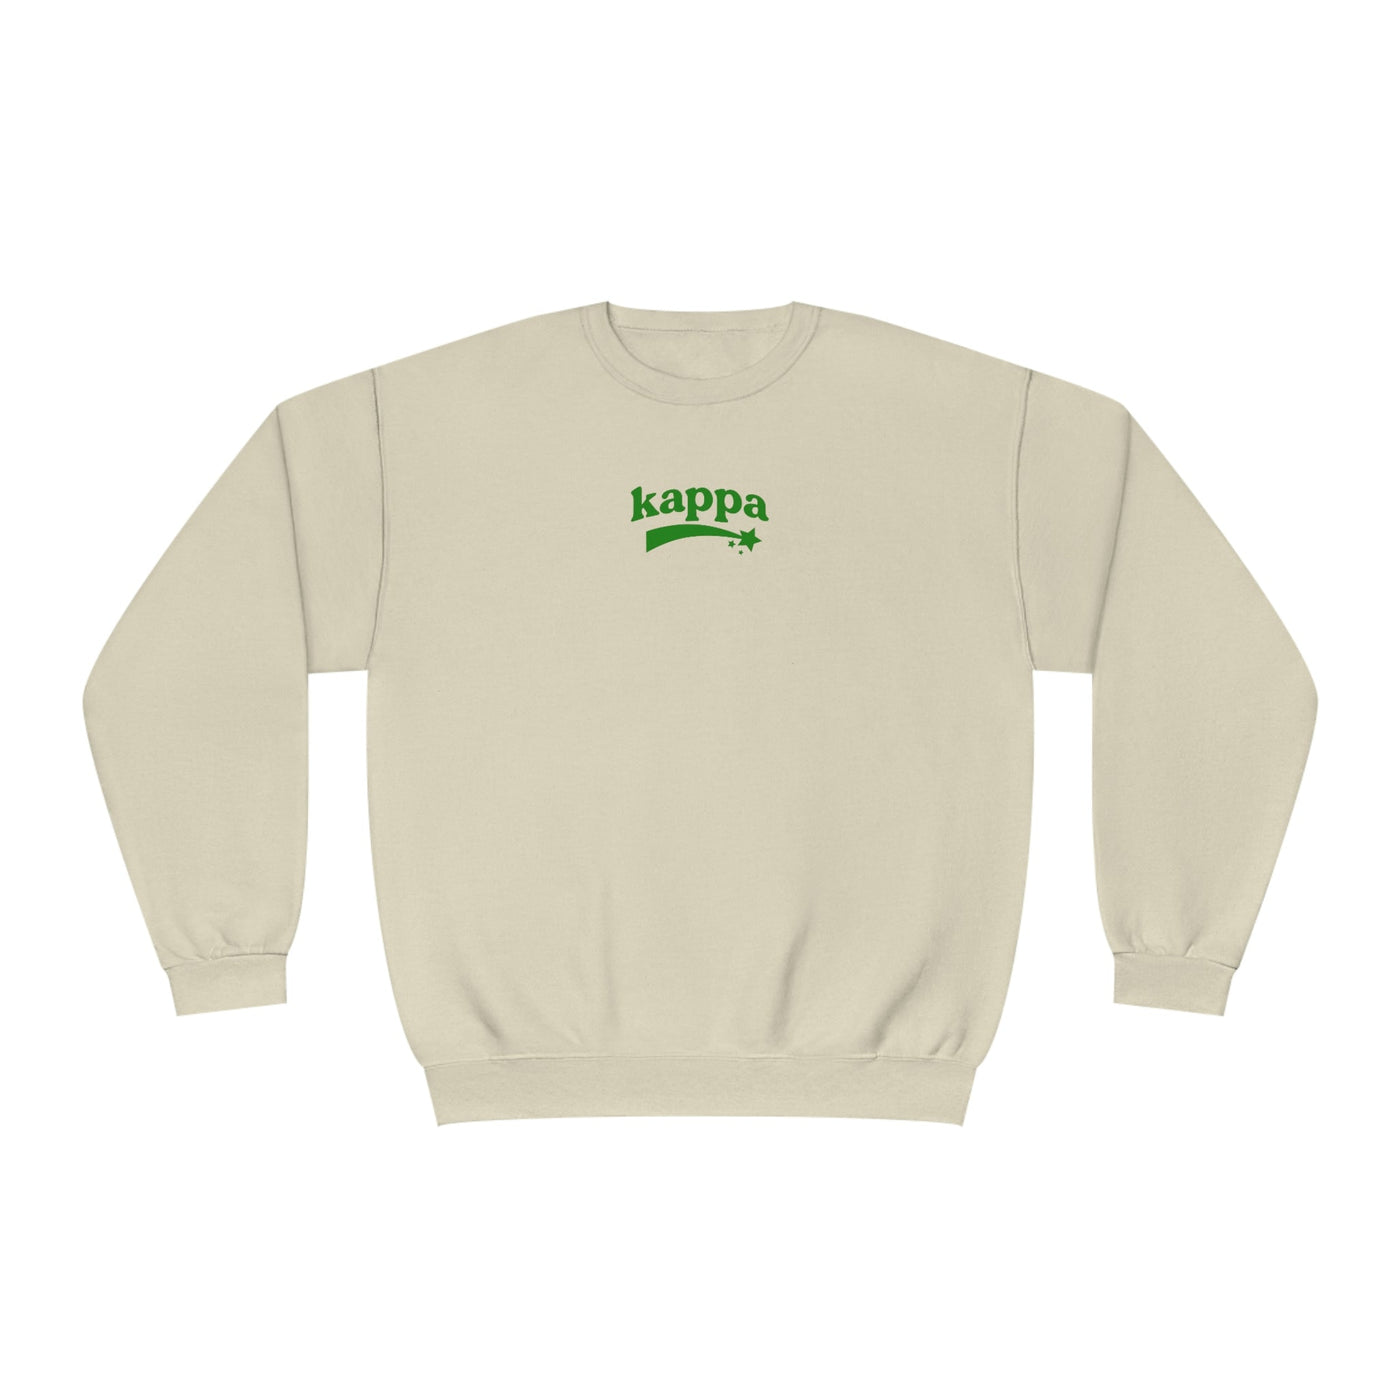 Kappa Kappa Gamma Crewneck Sweatshirt | Be Kind to the Planet Trendy Sorority Crewneck